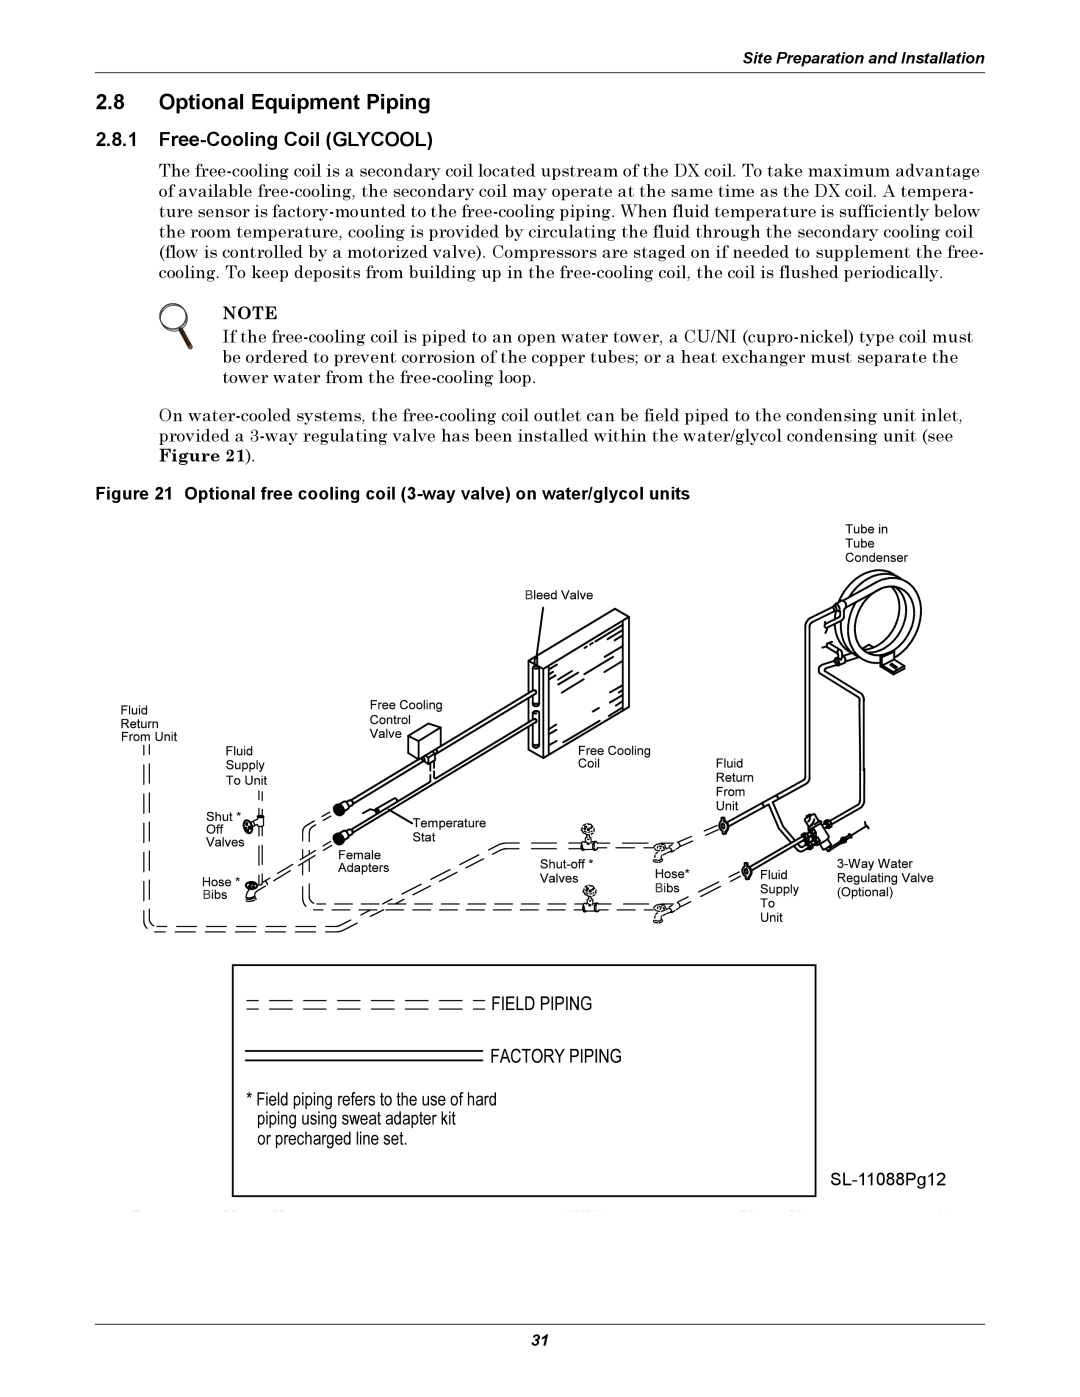 Liebert 50 & 60Hz, 8 Tons user manual 2.8Optional Equipment Piping, 2.8.1Free-CoolingCoil GLYCOOL 